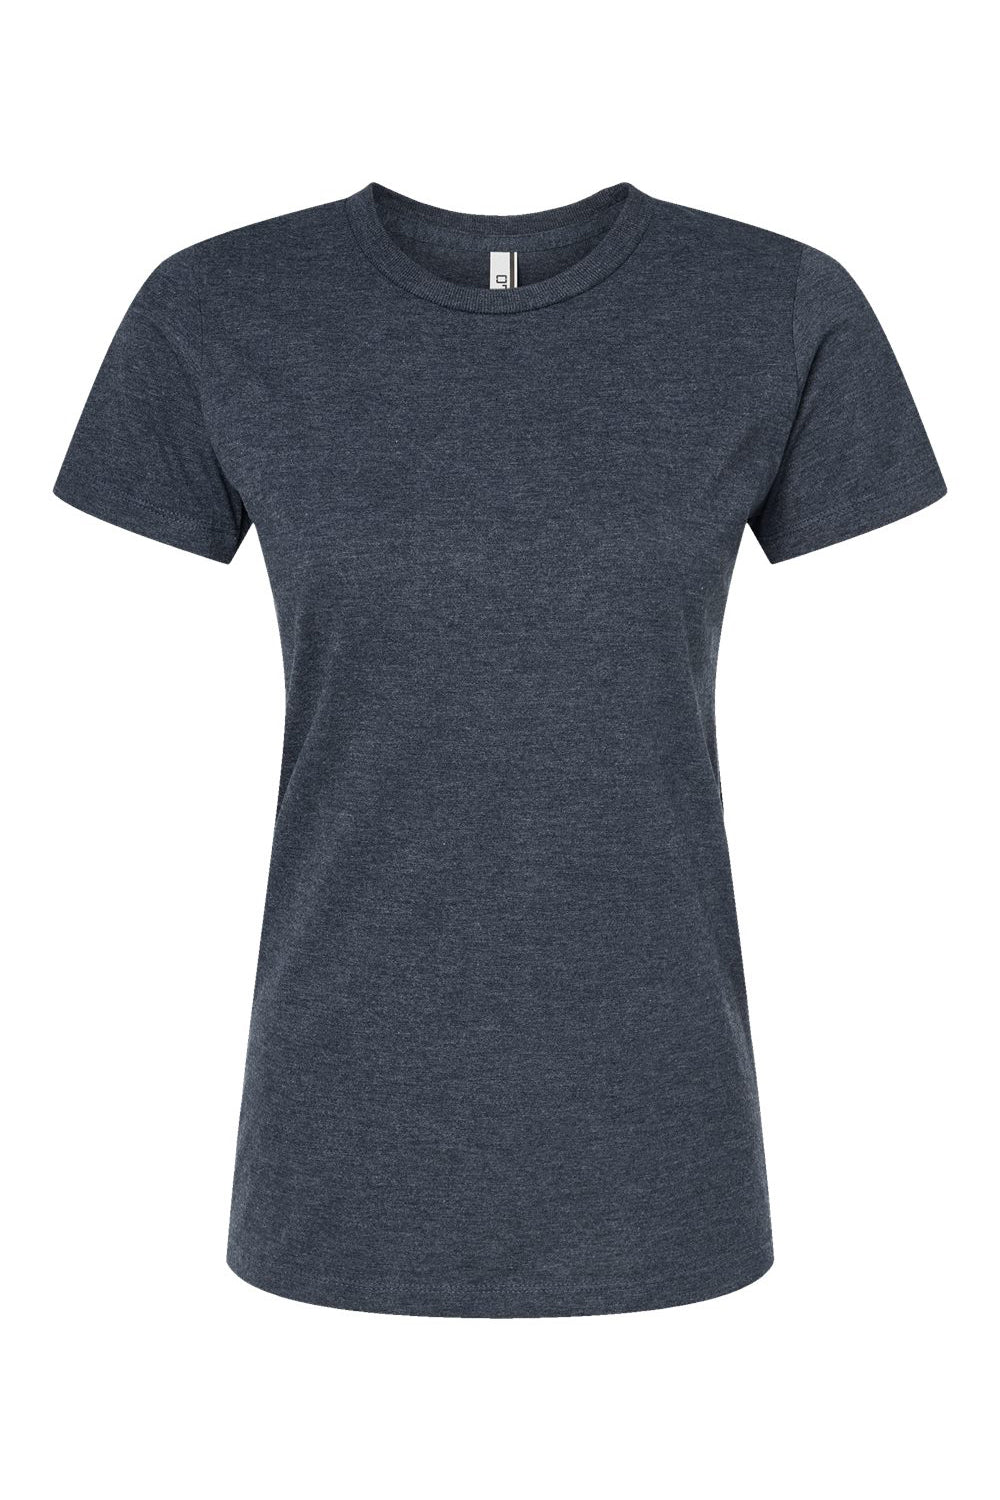 Tultex 542 Womens Premium Short Sleeve Crewneck T-Shirt Heather Navy Blue Flat Front